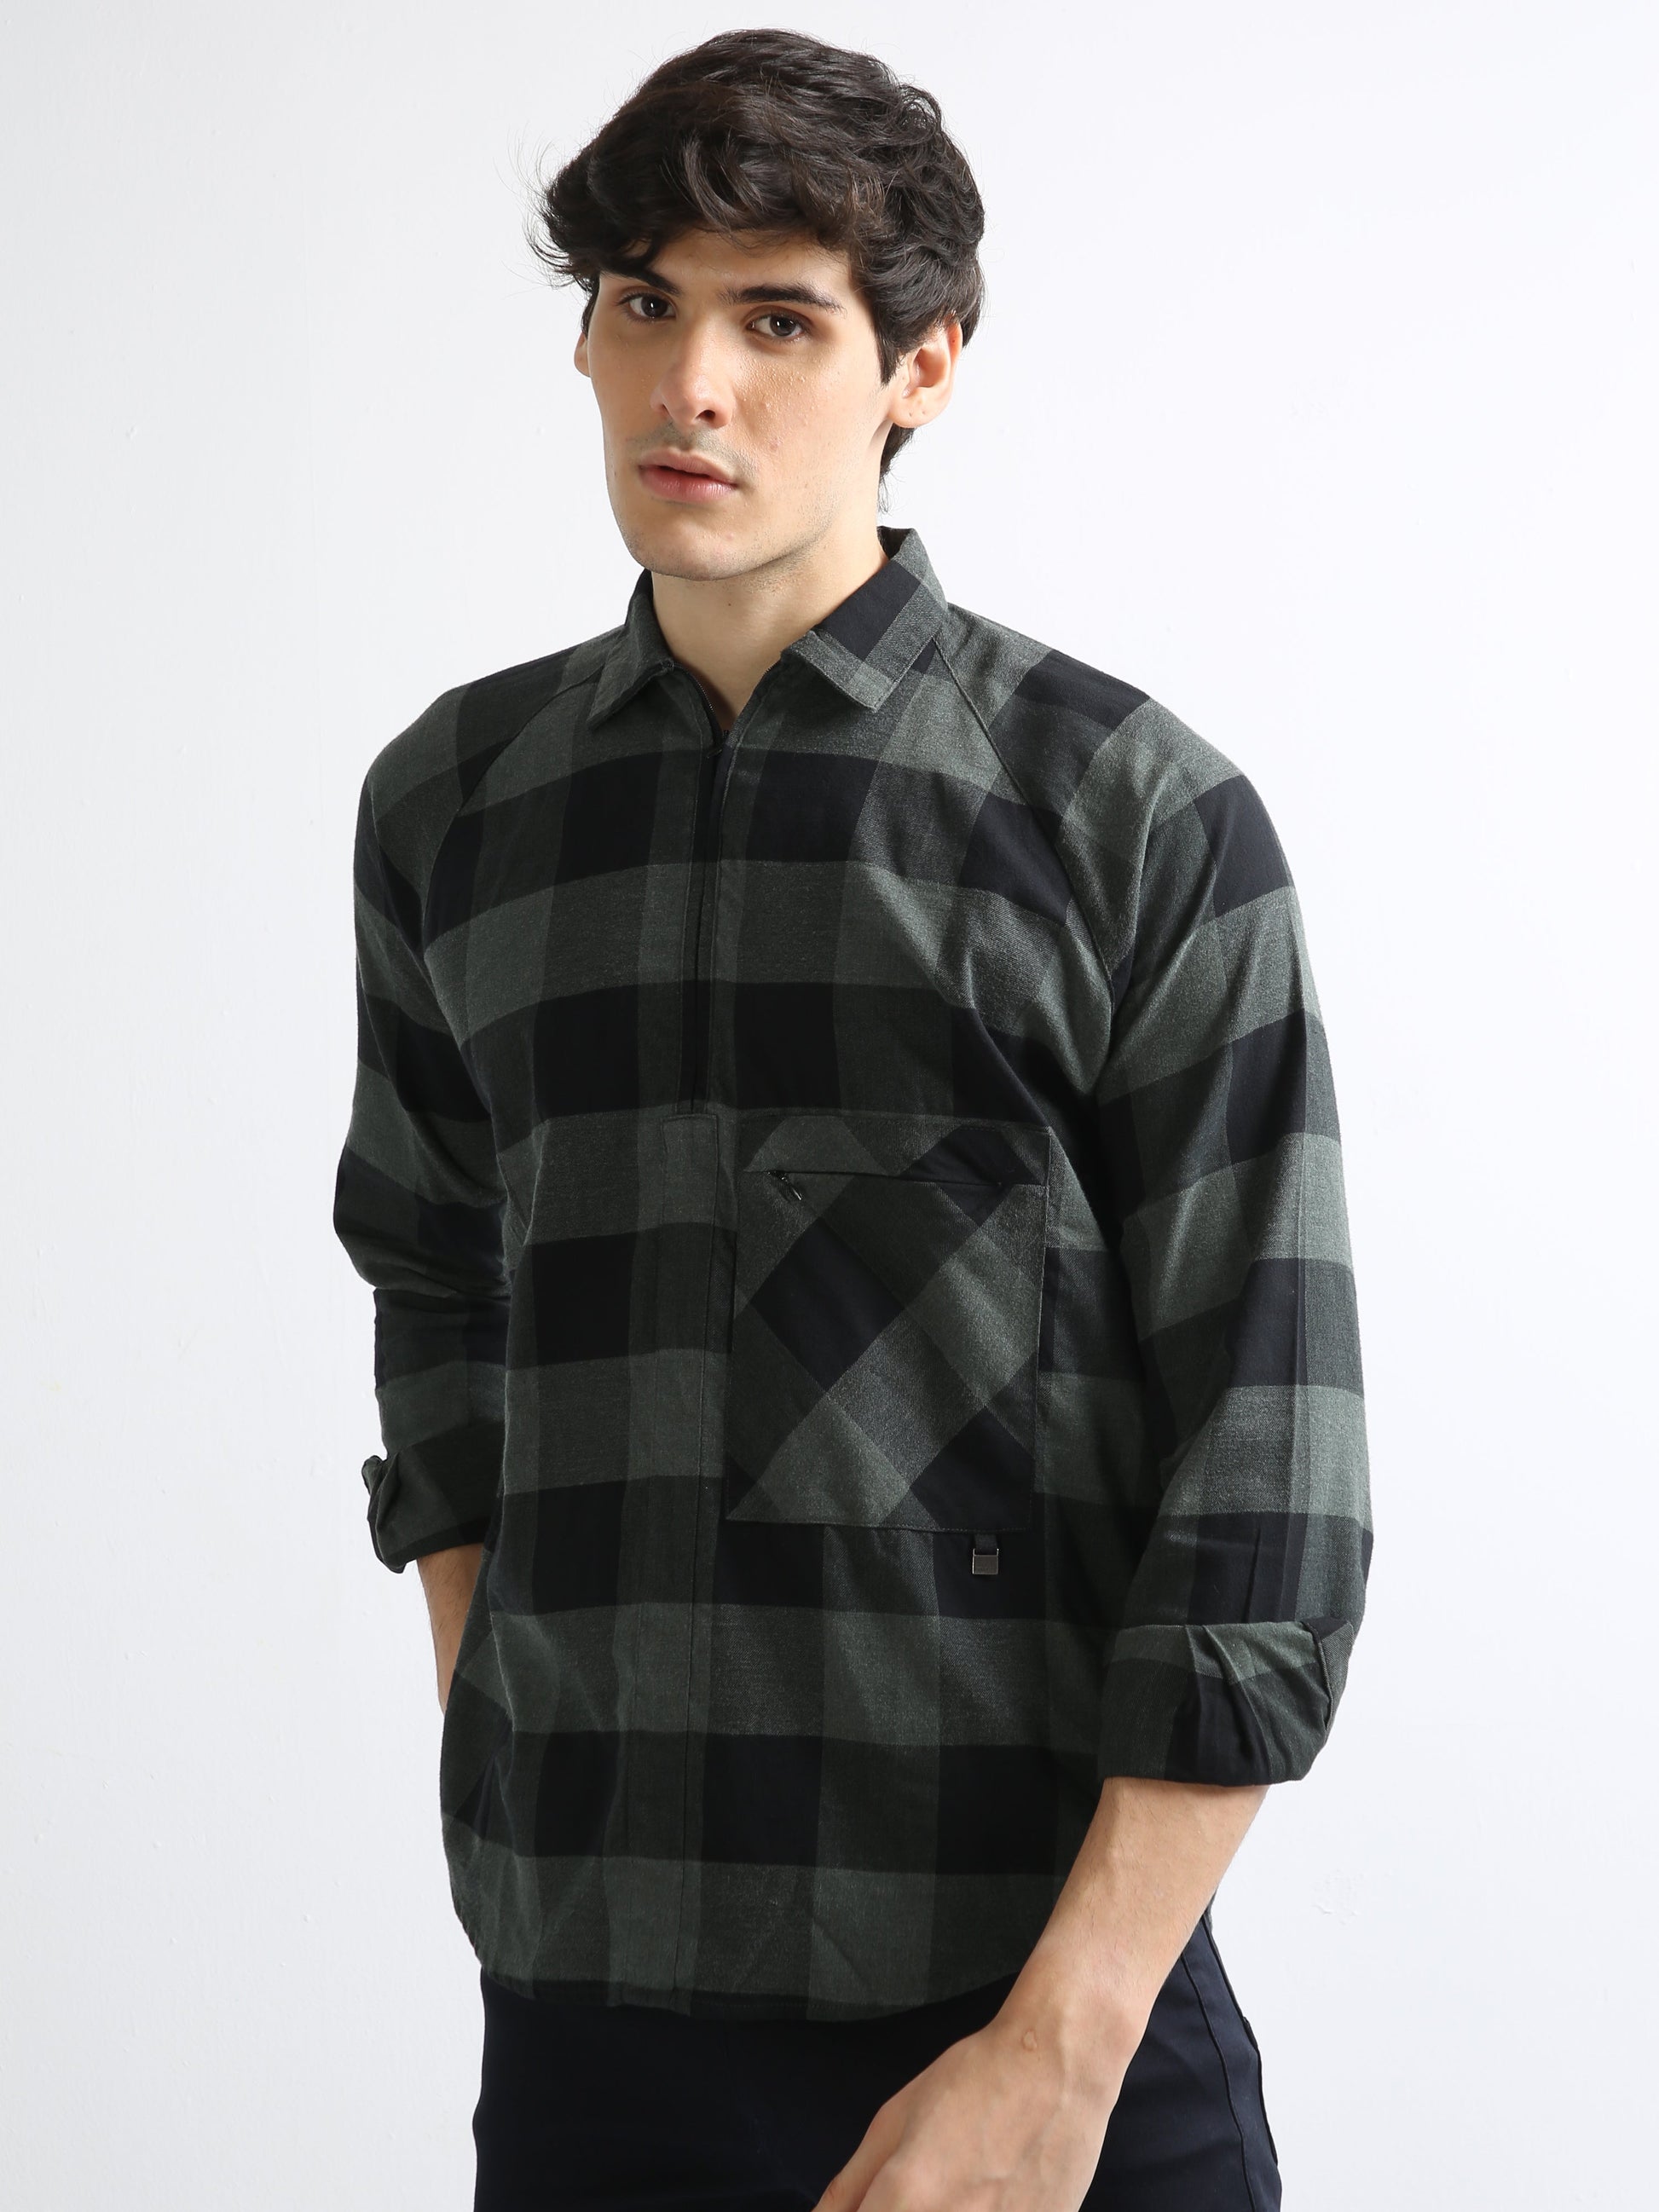 Buy Raglan Full Sleeves Kurta Style Shirt Online.